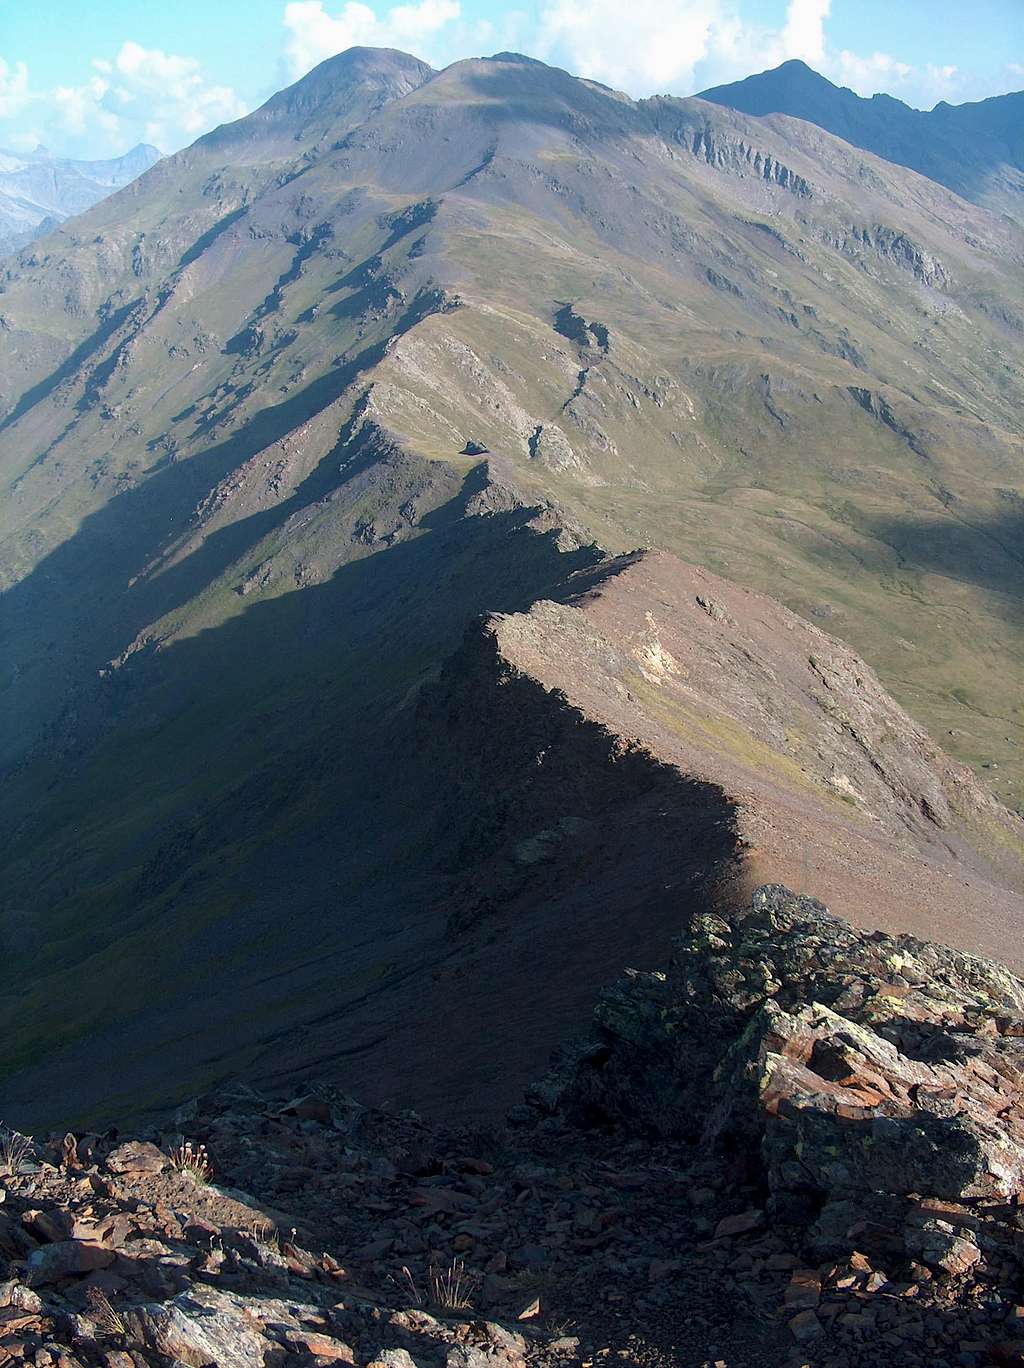 From Pico d'Ordiceto, West ridge